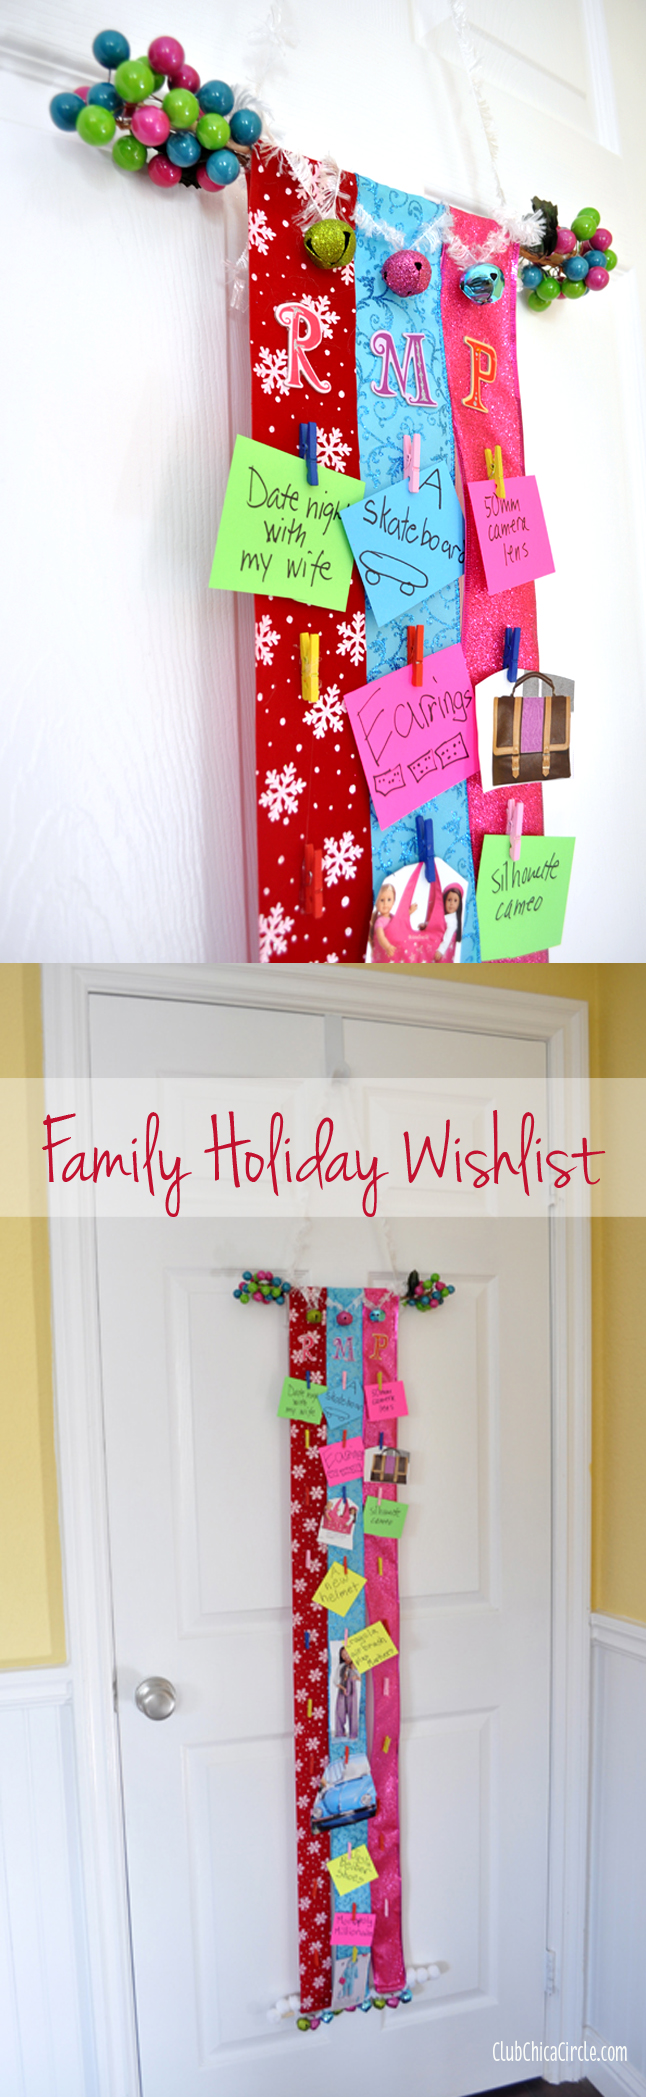 Family ribbon holiday wishlist hanger